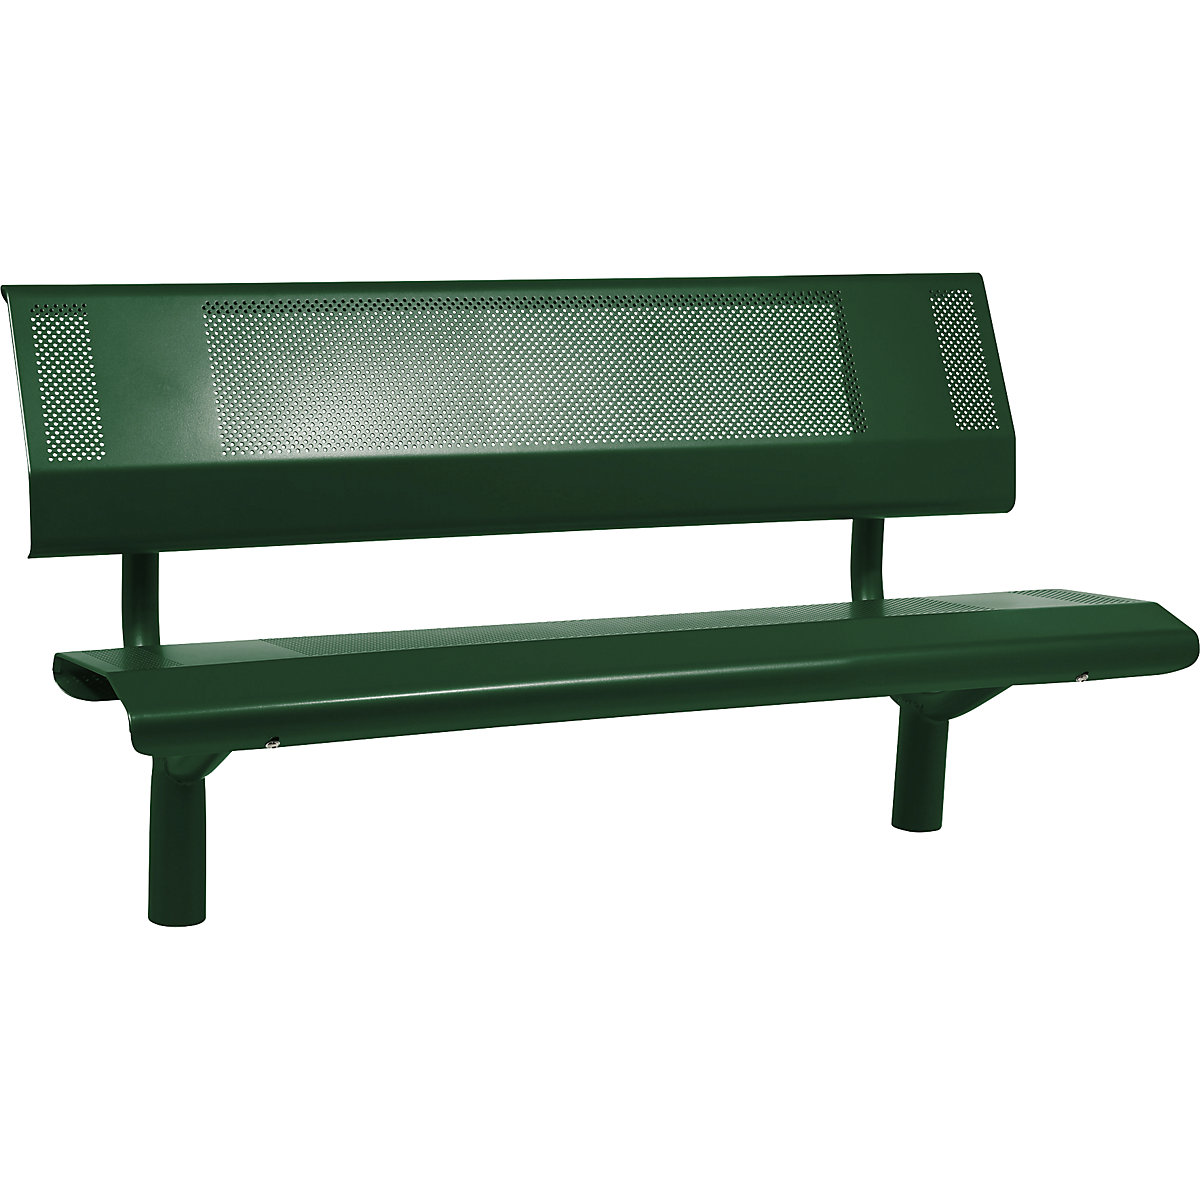 Jeklena klop OSLO – PROCITY, višina sedeža 450 mm, mahovo zelene barve, s hrbtnim naslonjalom-1